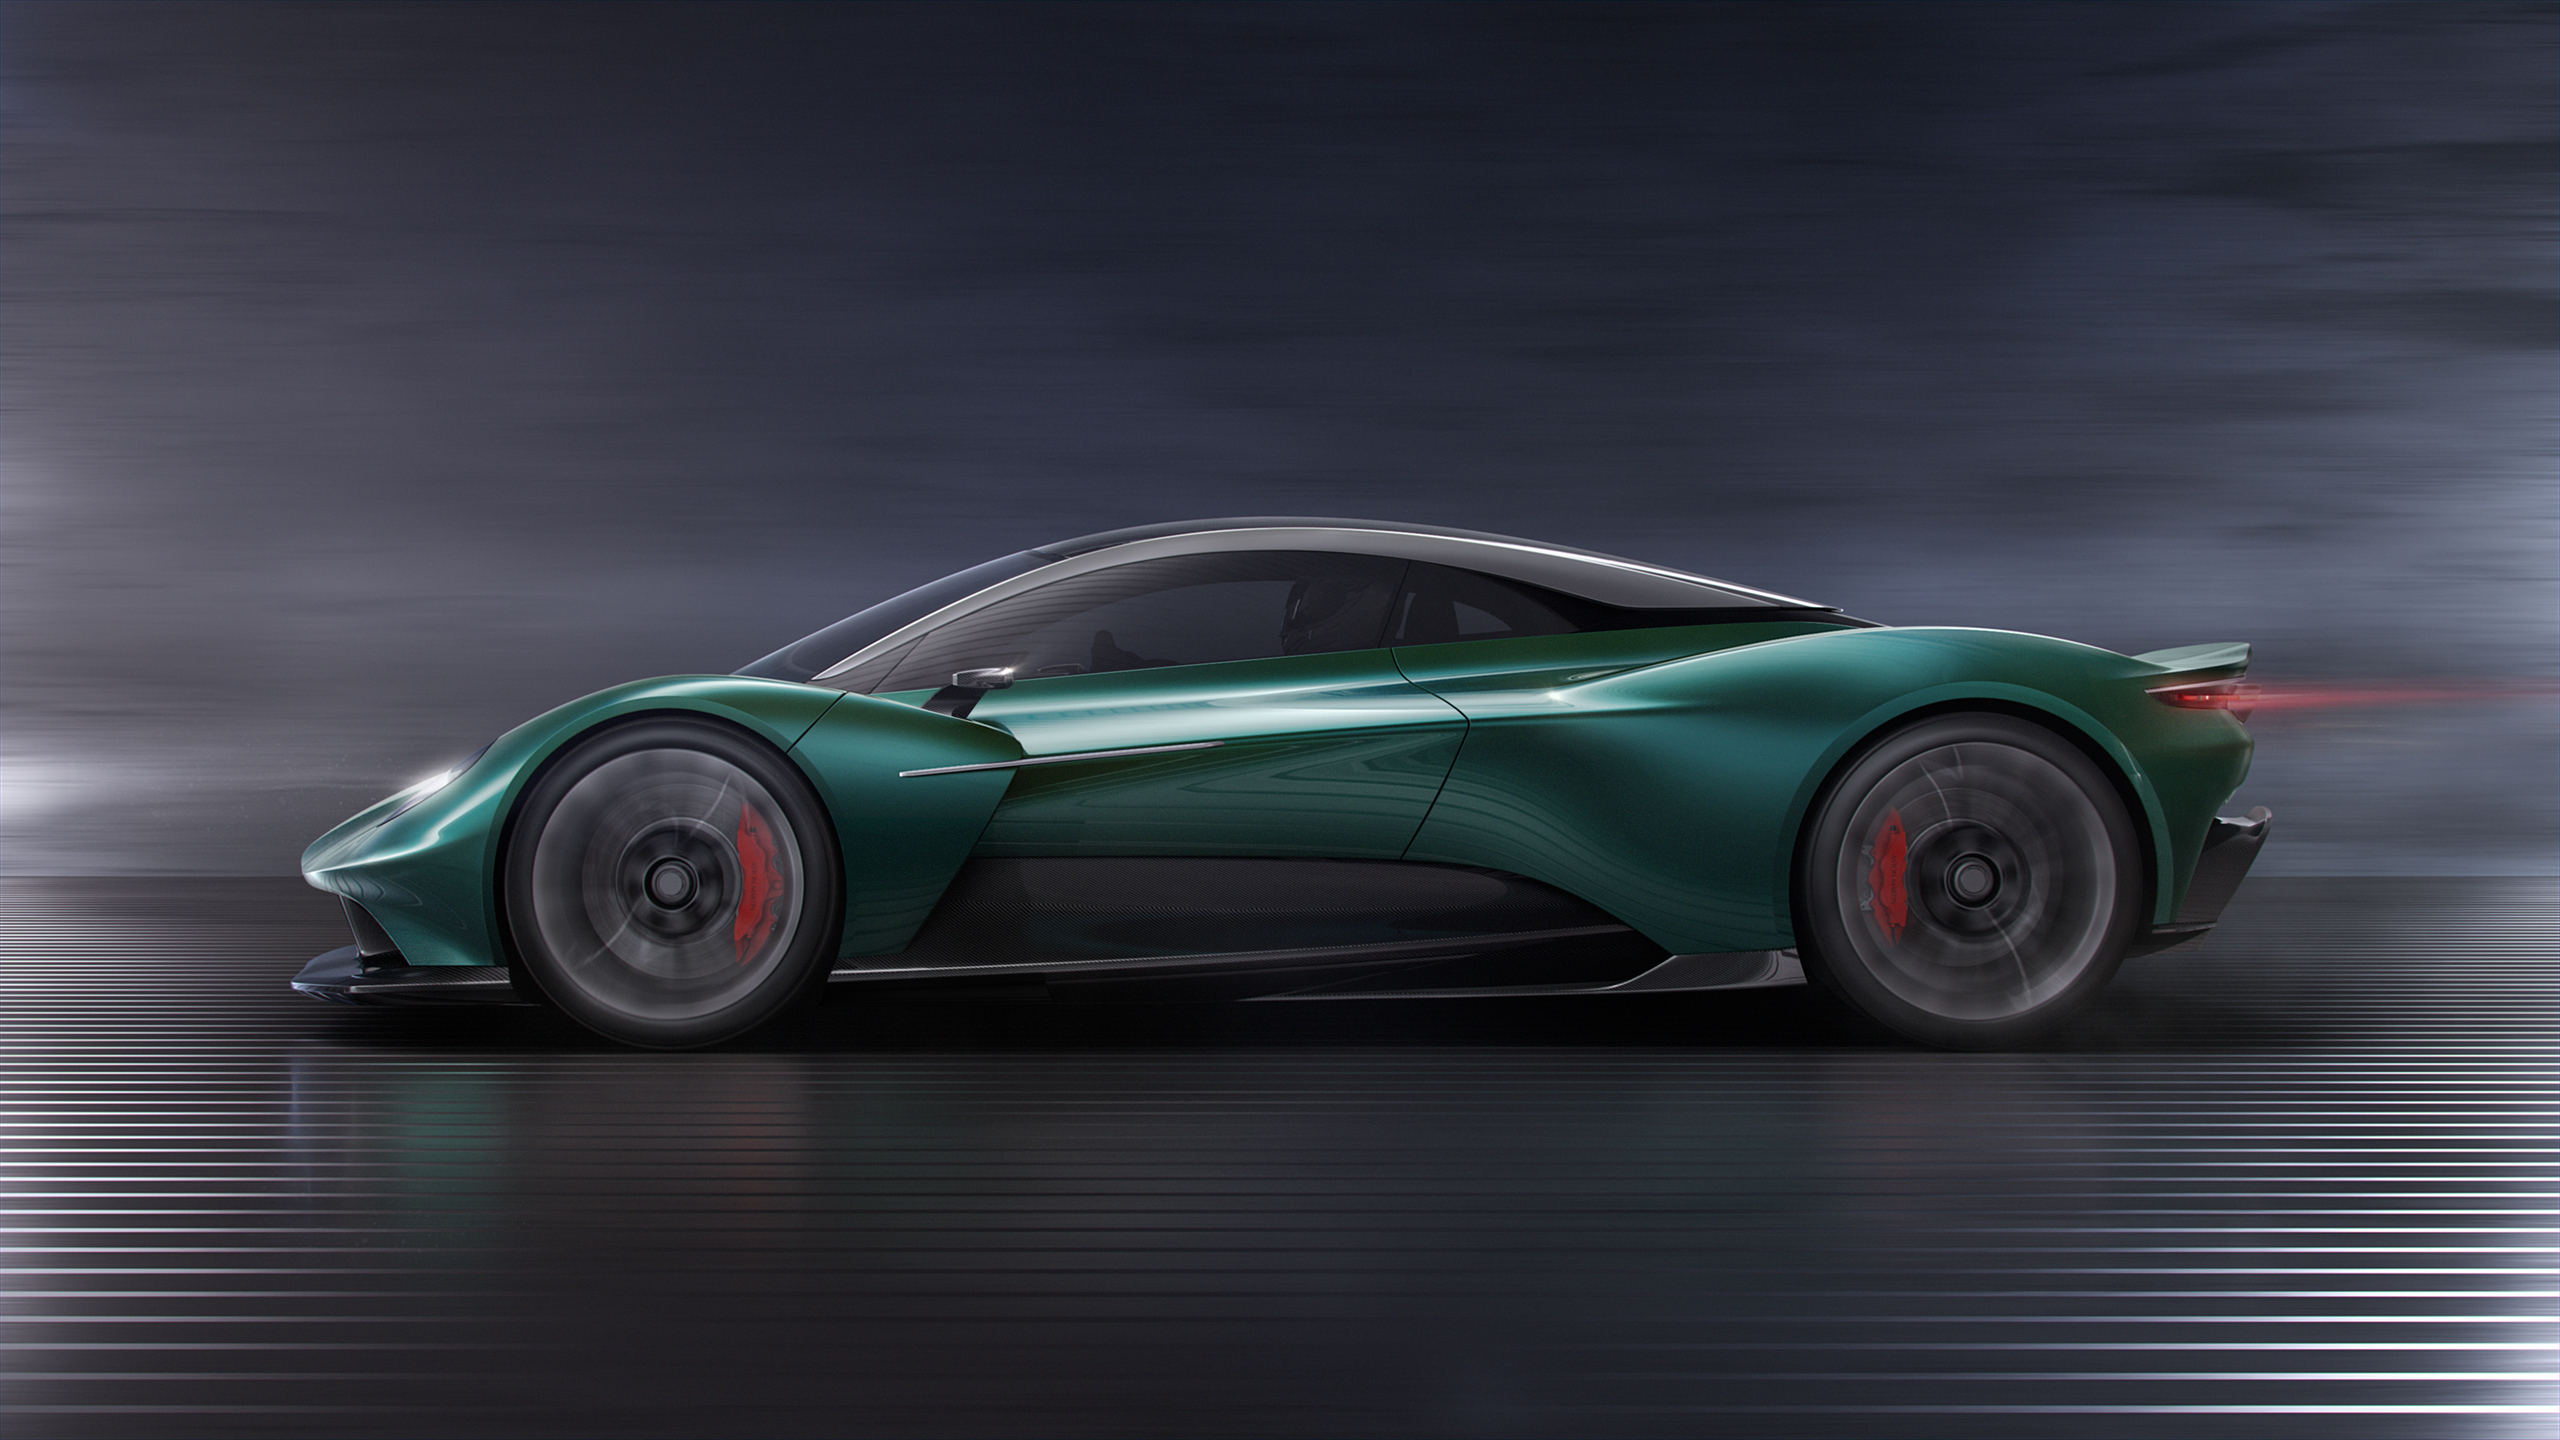 Modern Luxury: The Aston Martin Vanquish Vision Concept